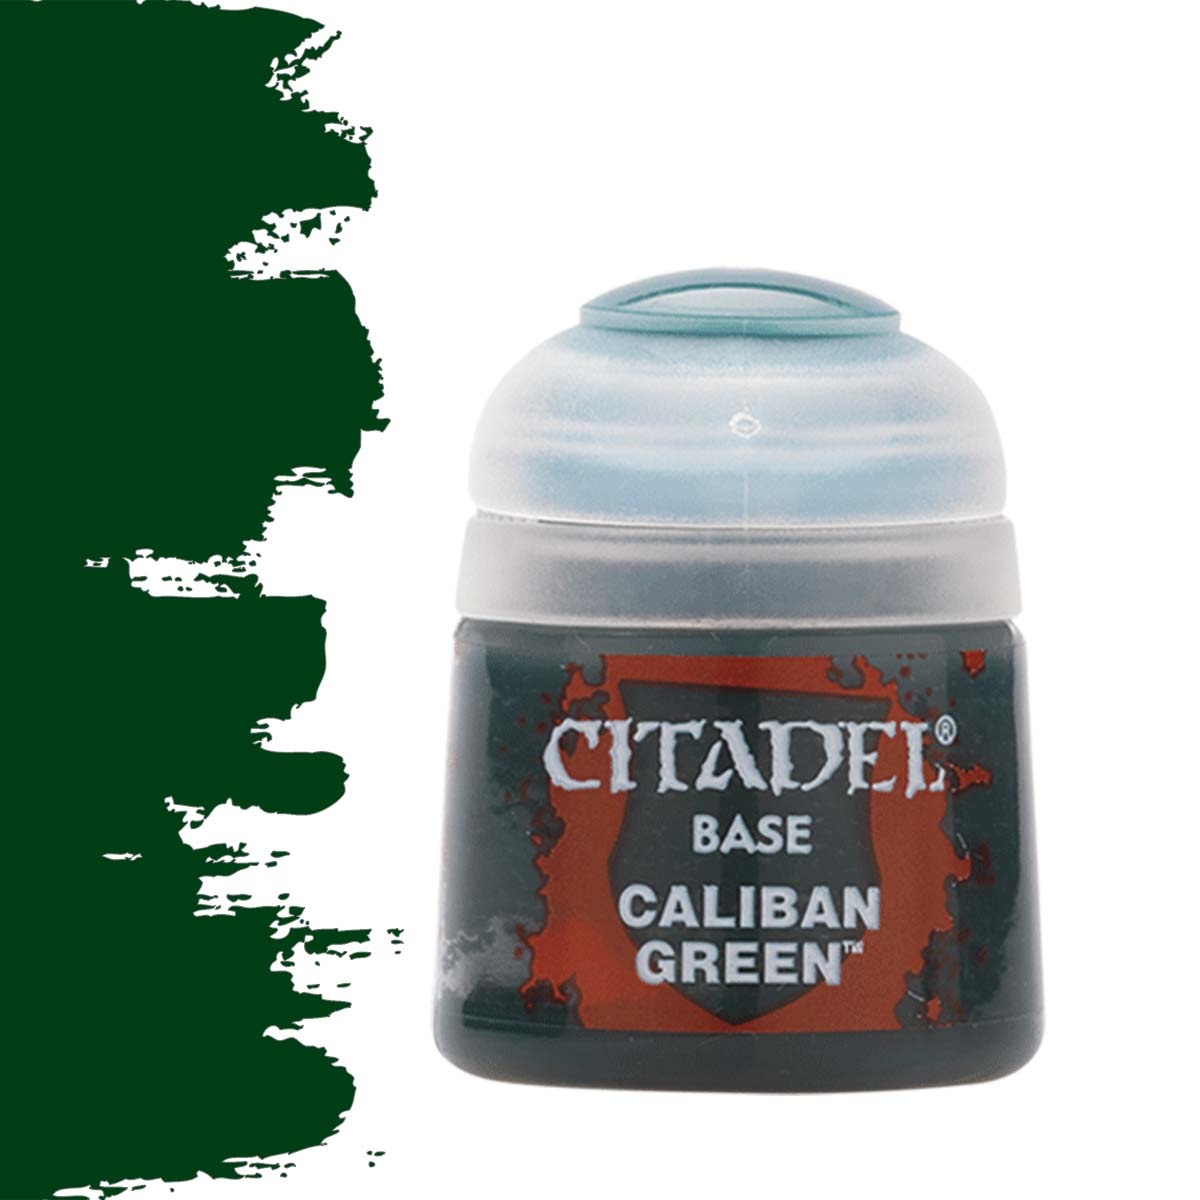 Citadel Caliban Green - Base Paint - 12ml - 21-12 - Buy now at Scenery ...